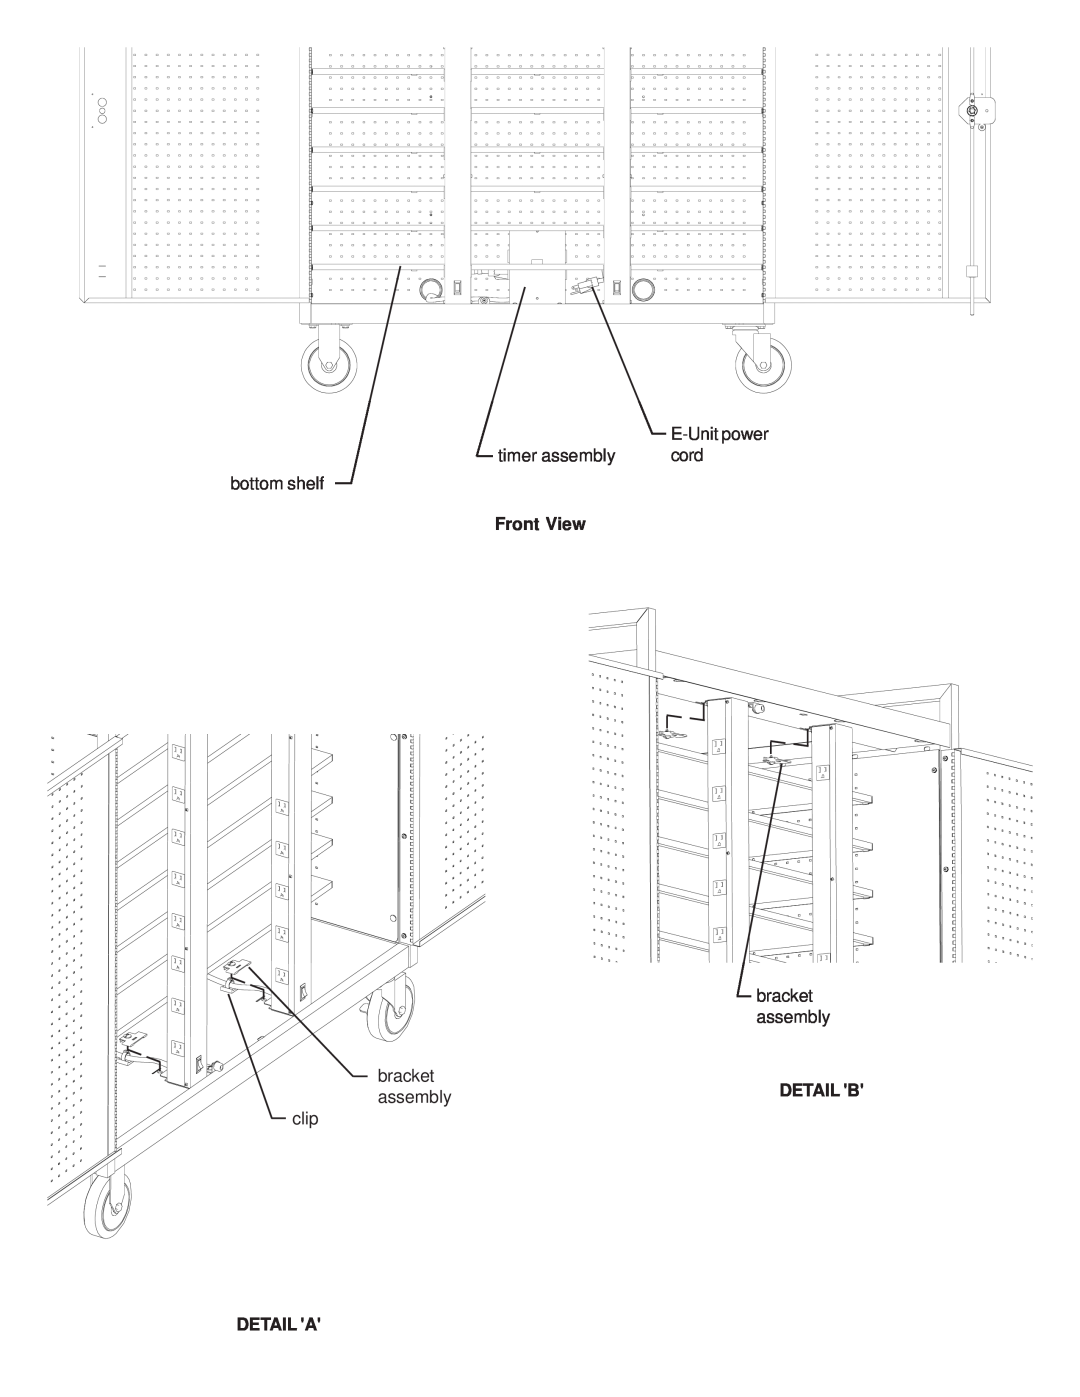 Bretford LAP30EULBA manual E-Unitpower, timer assembly, cord, bottom shelf, Front View, bracket assembly, clip, Detail A 